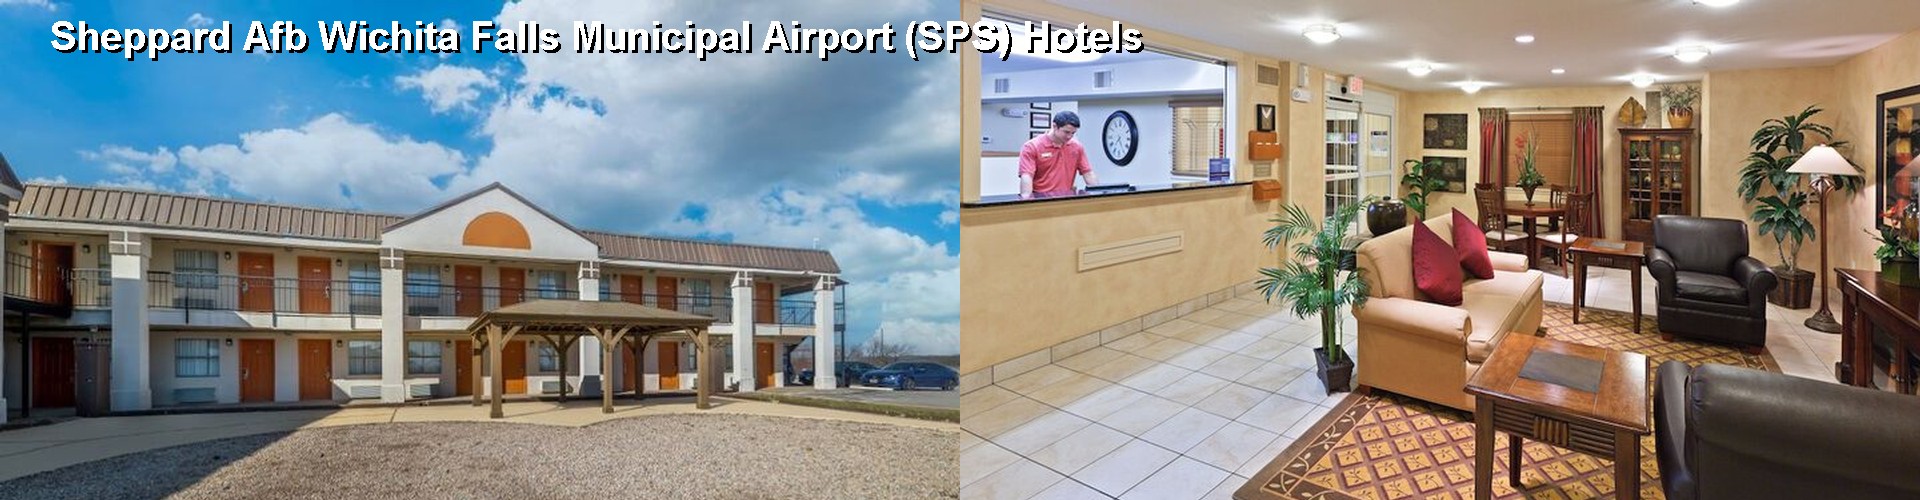 3 Best Hotels near Sheppard Afb Wichita Falls Municipal Airport (SPS)